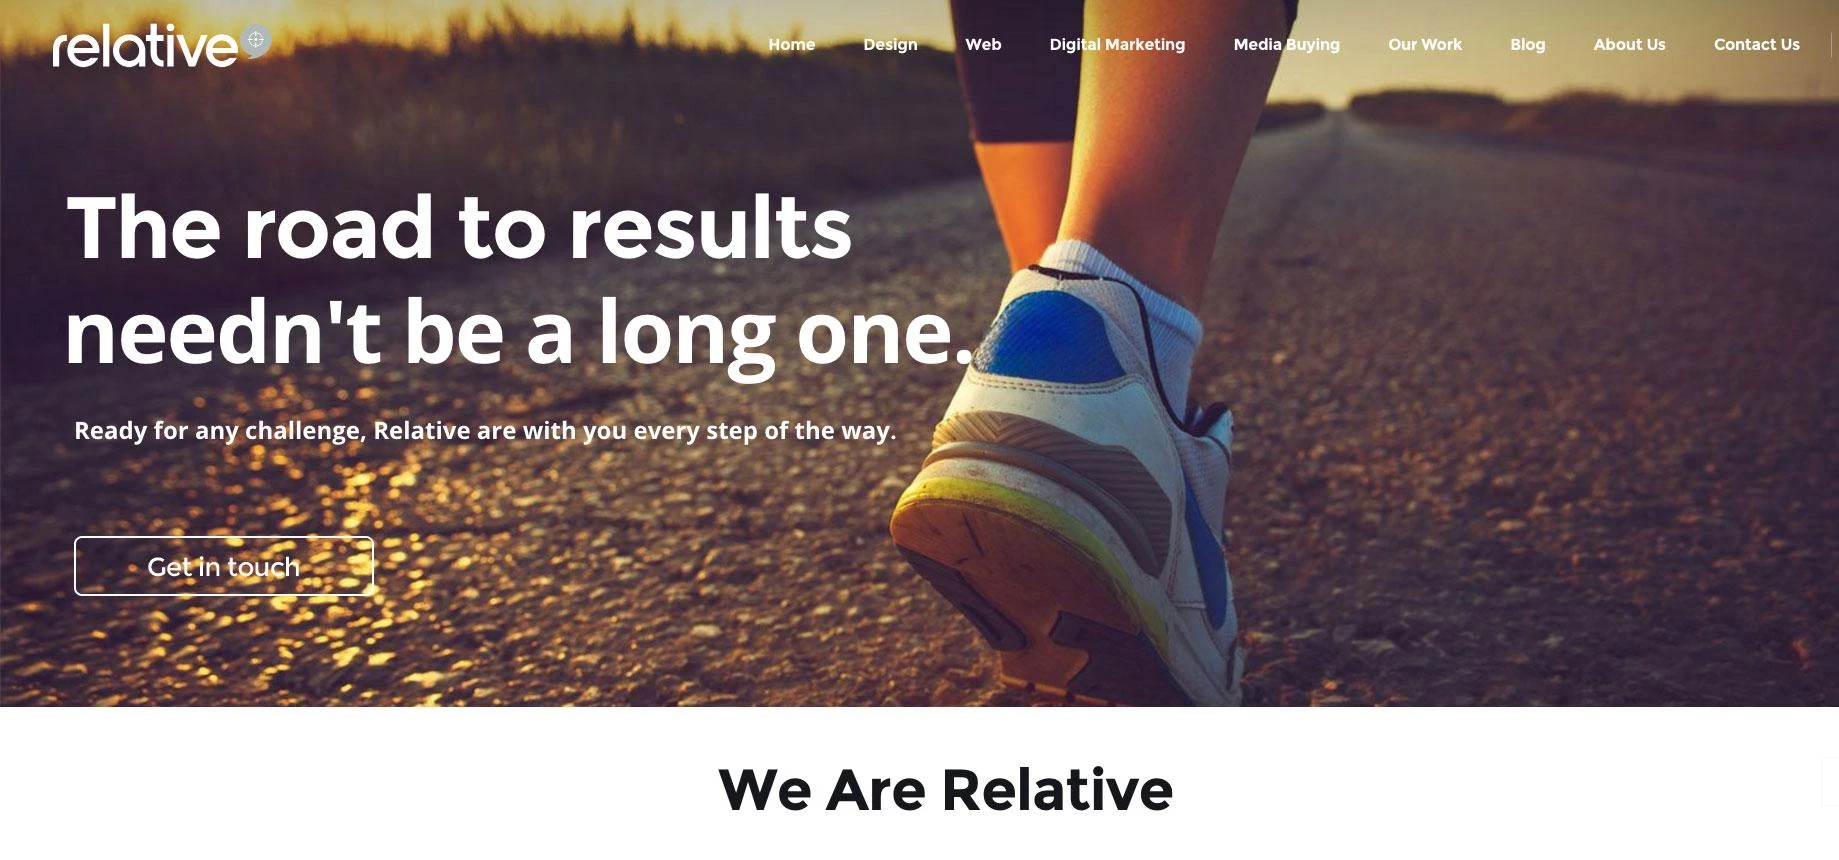 Relative Marketing new website